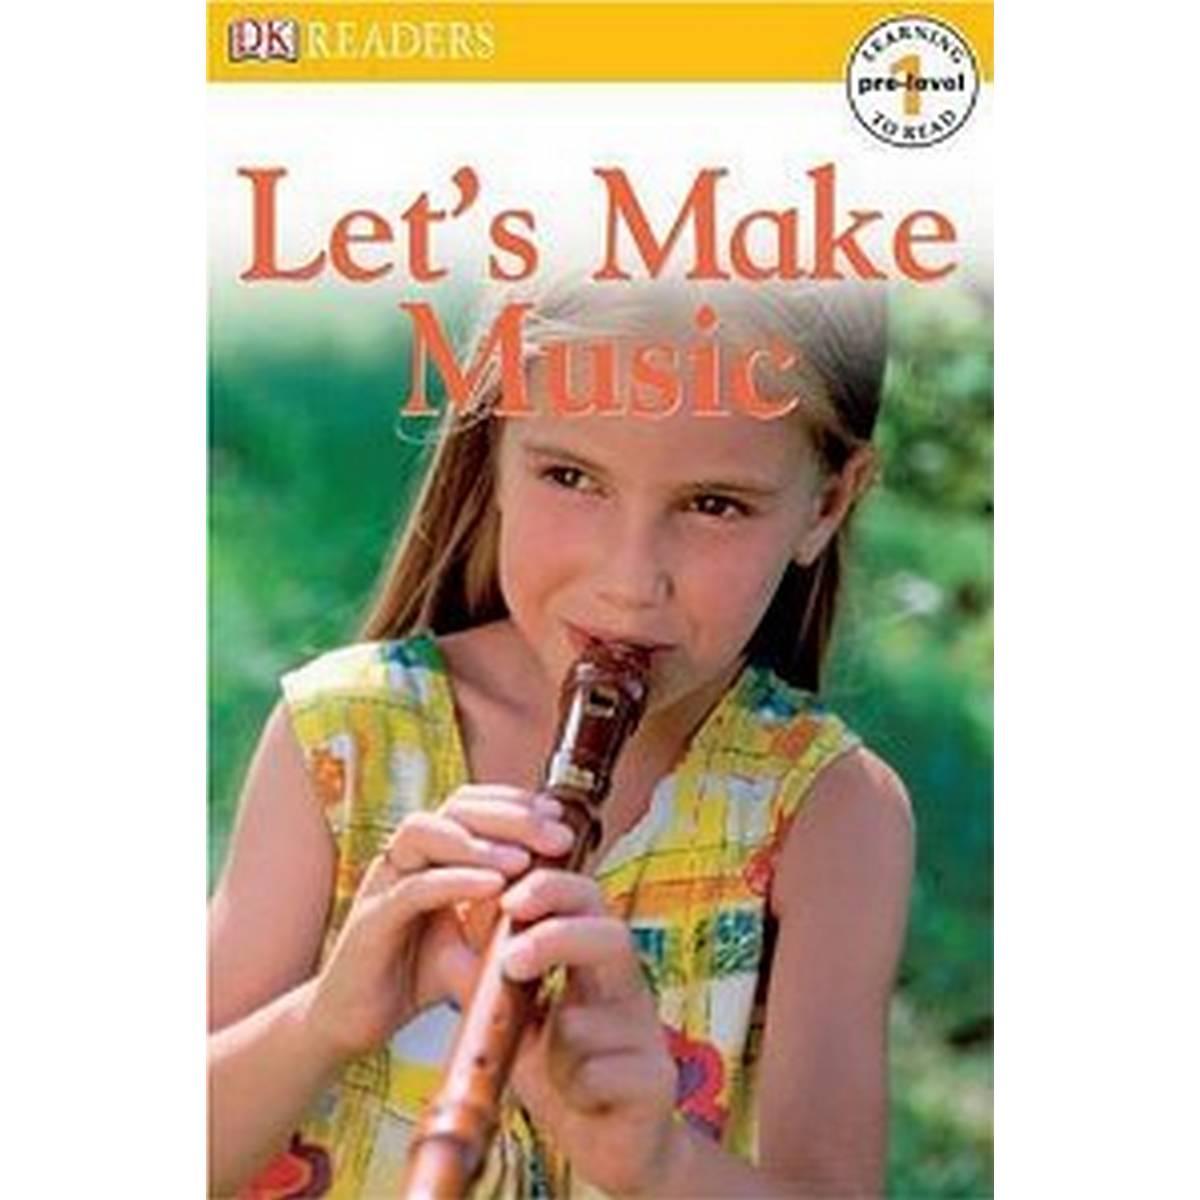 Let's Make Music (Dk Readers pre-level 1)